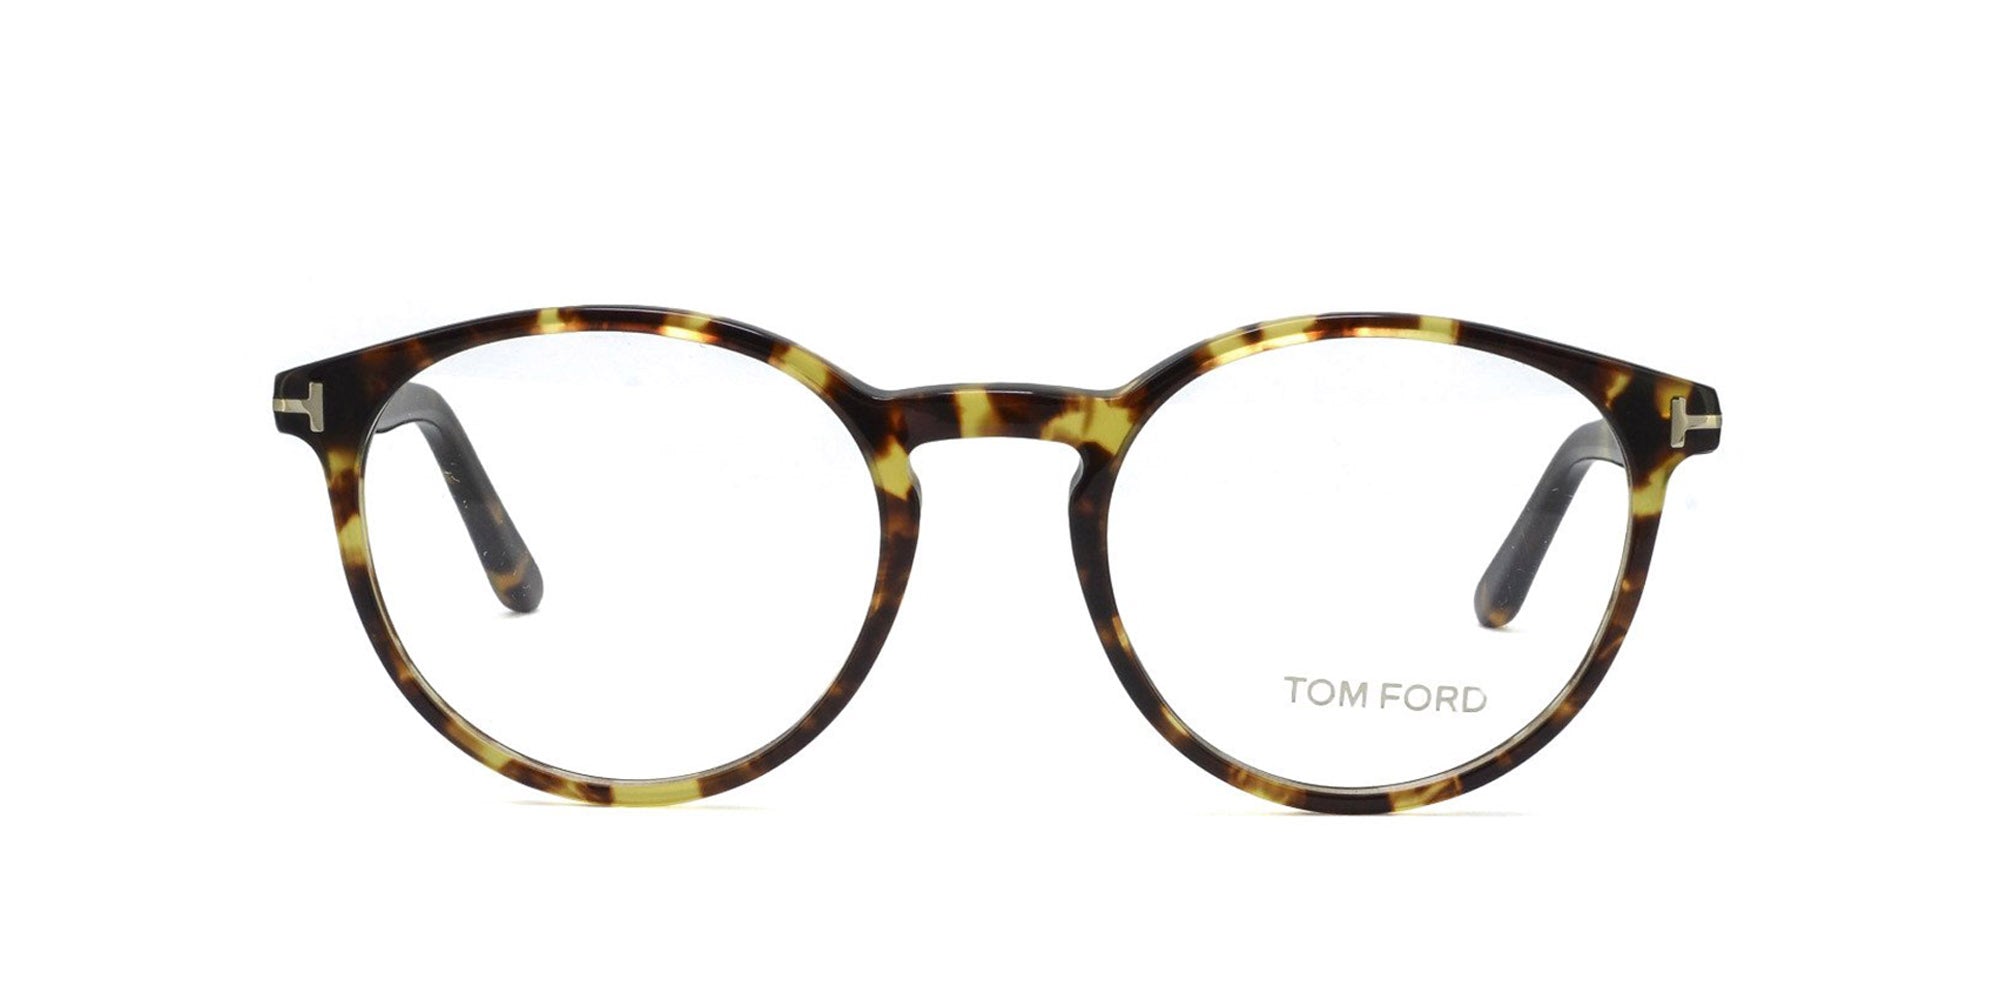 Tom Ford TF5524 Round Glasses | Fashion Eyewear